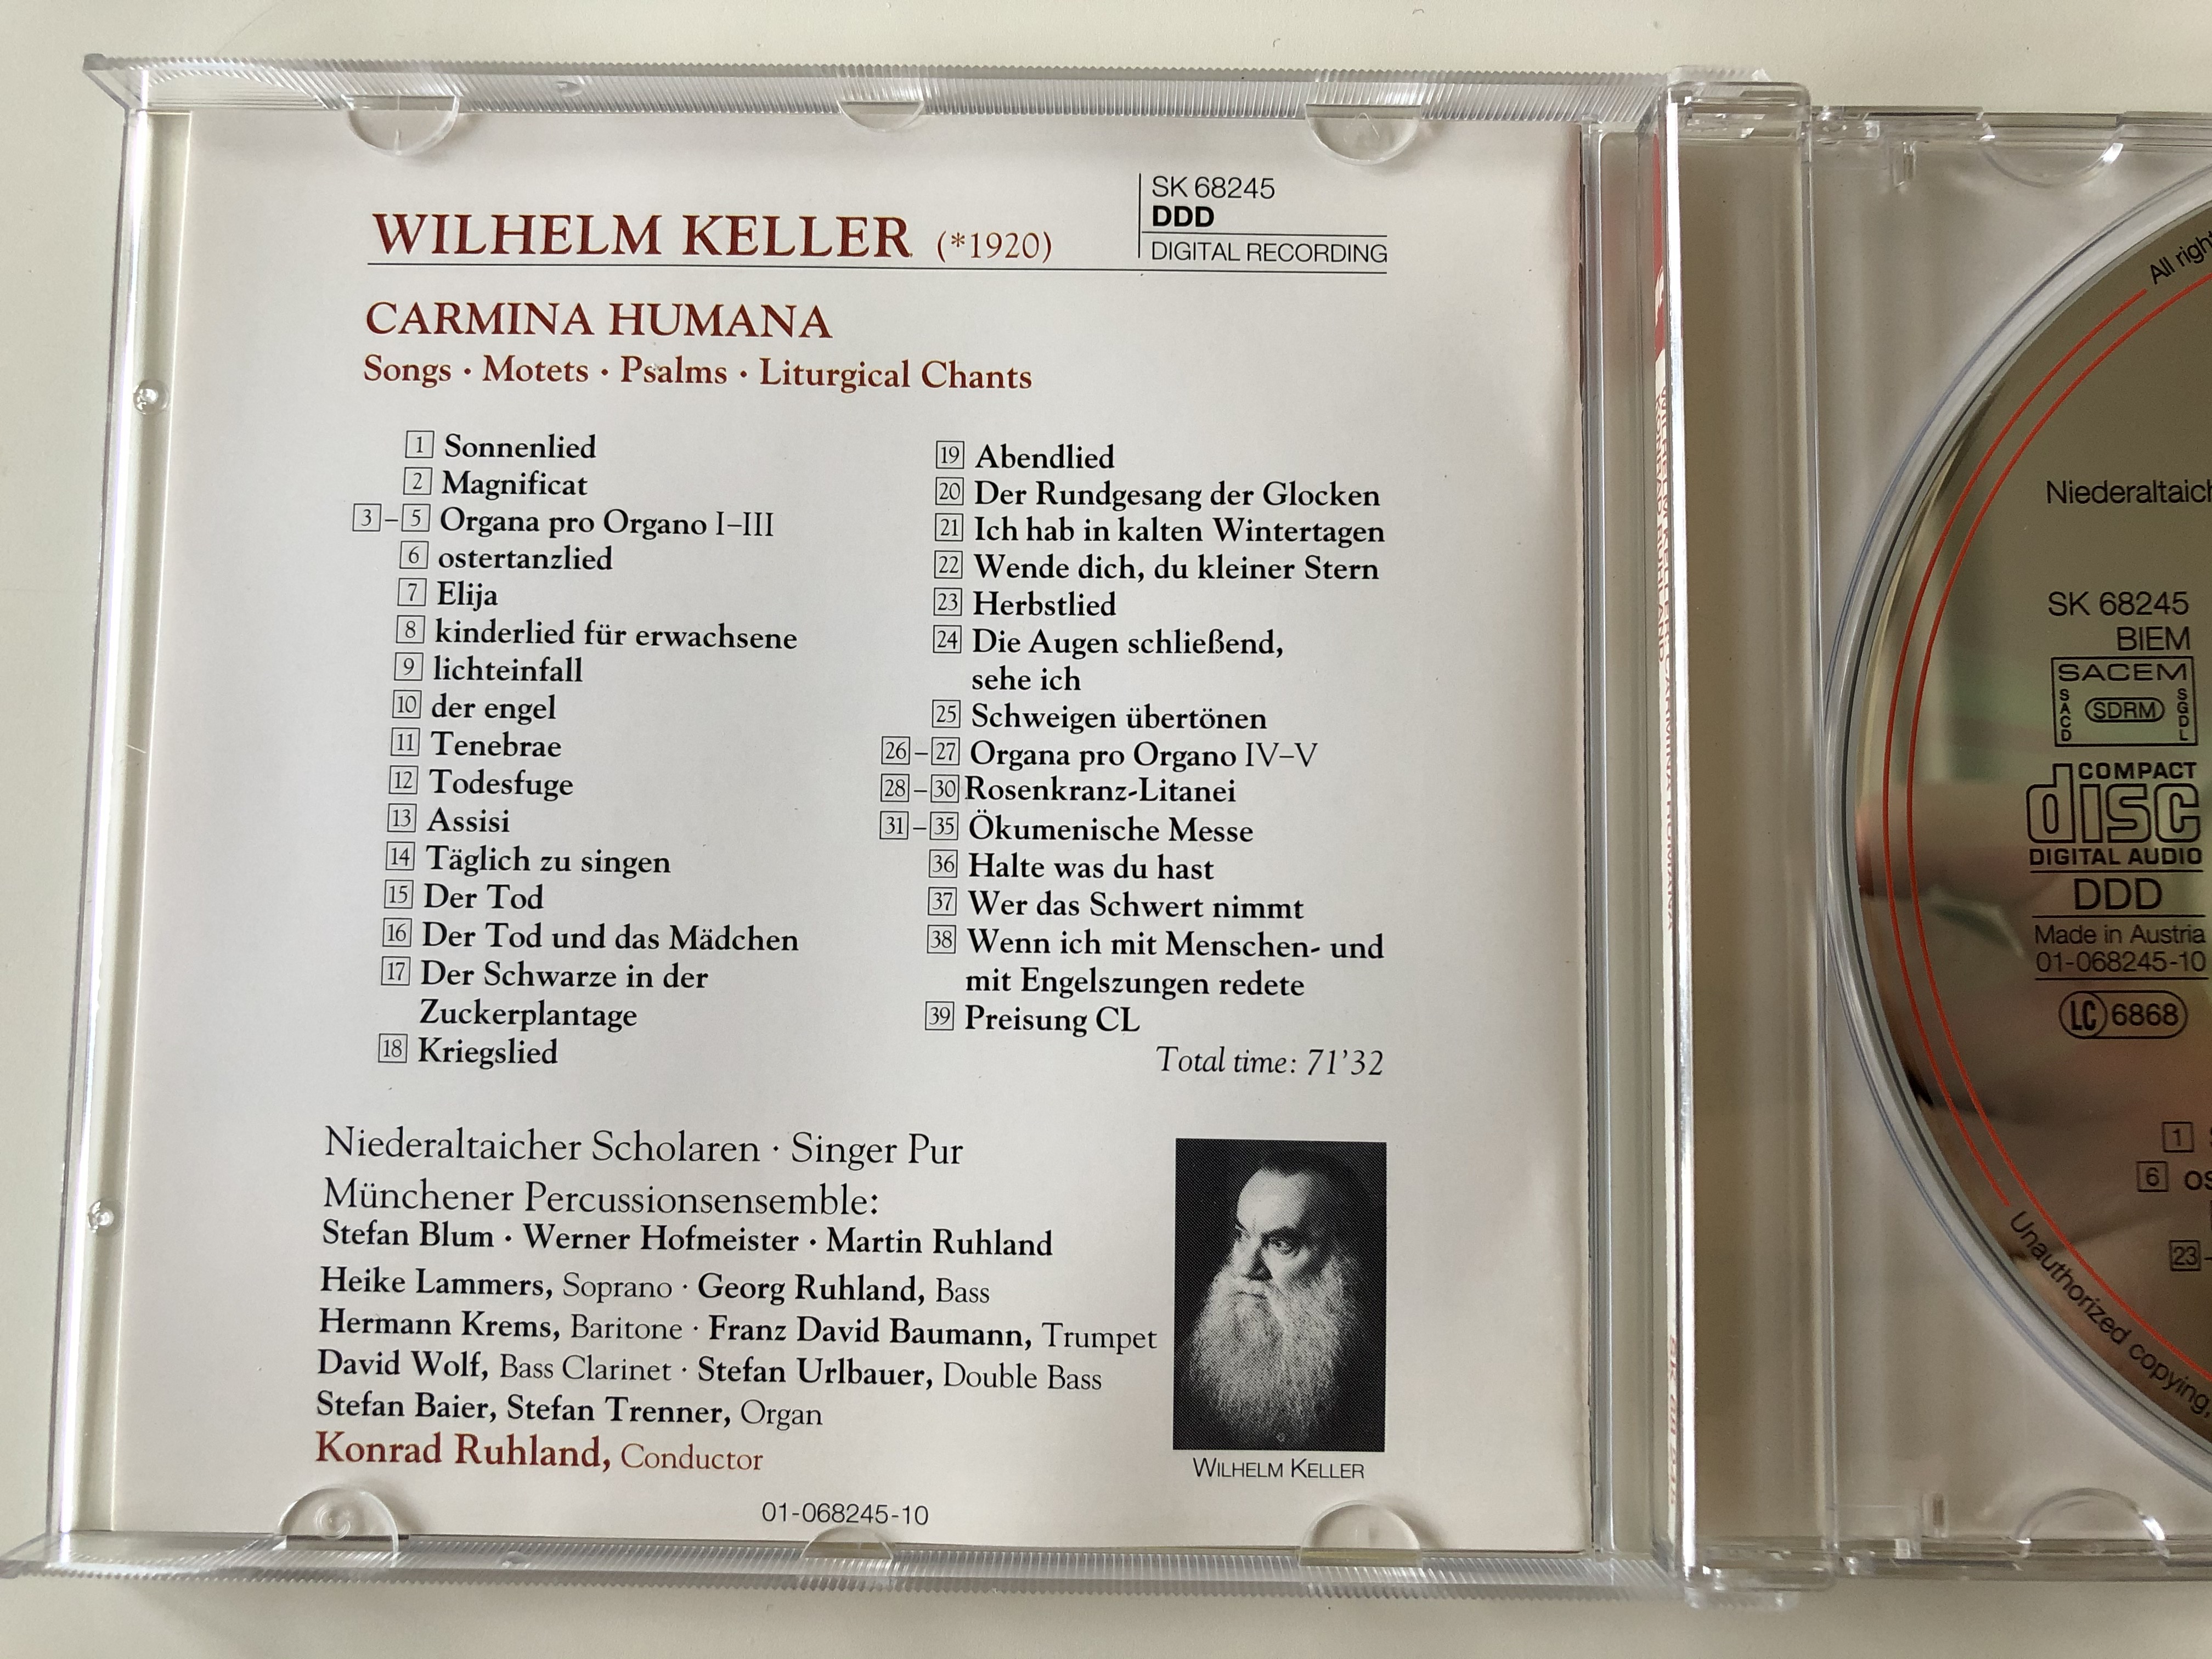 carmina-humana-by-wilhelm-keller-songs-motets-psalms-liturgical-chants-niederaltaicher-scholaren-konrad-ruhland-sony-classical-audio-cd-1995-sk-68245-11-.jpg